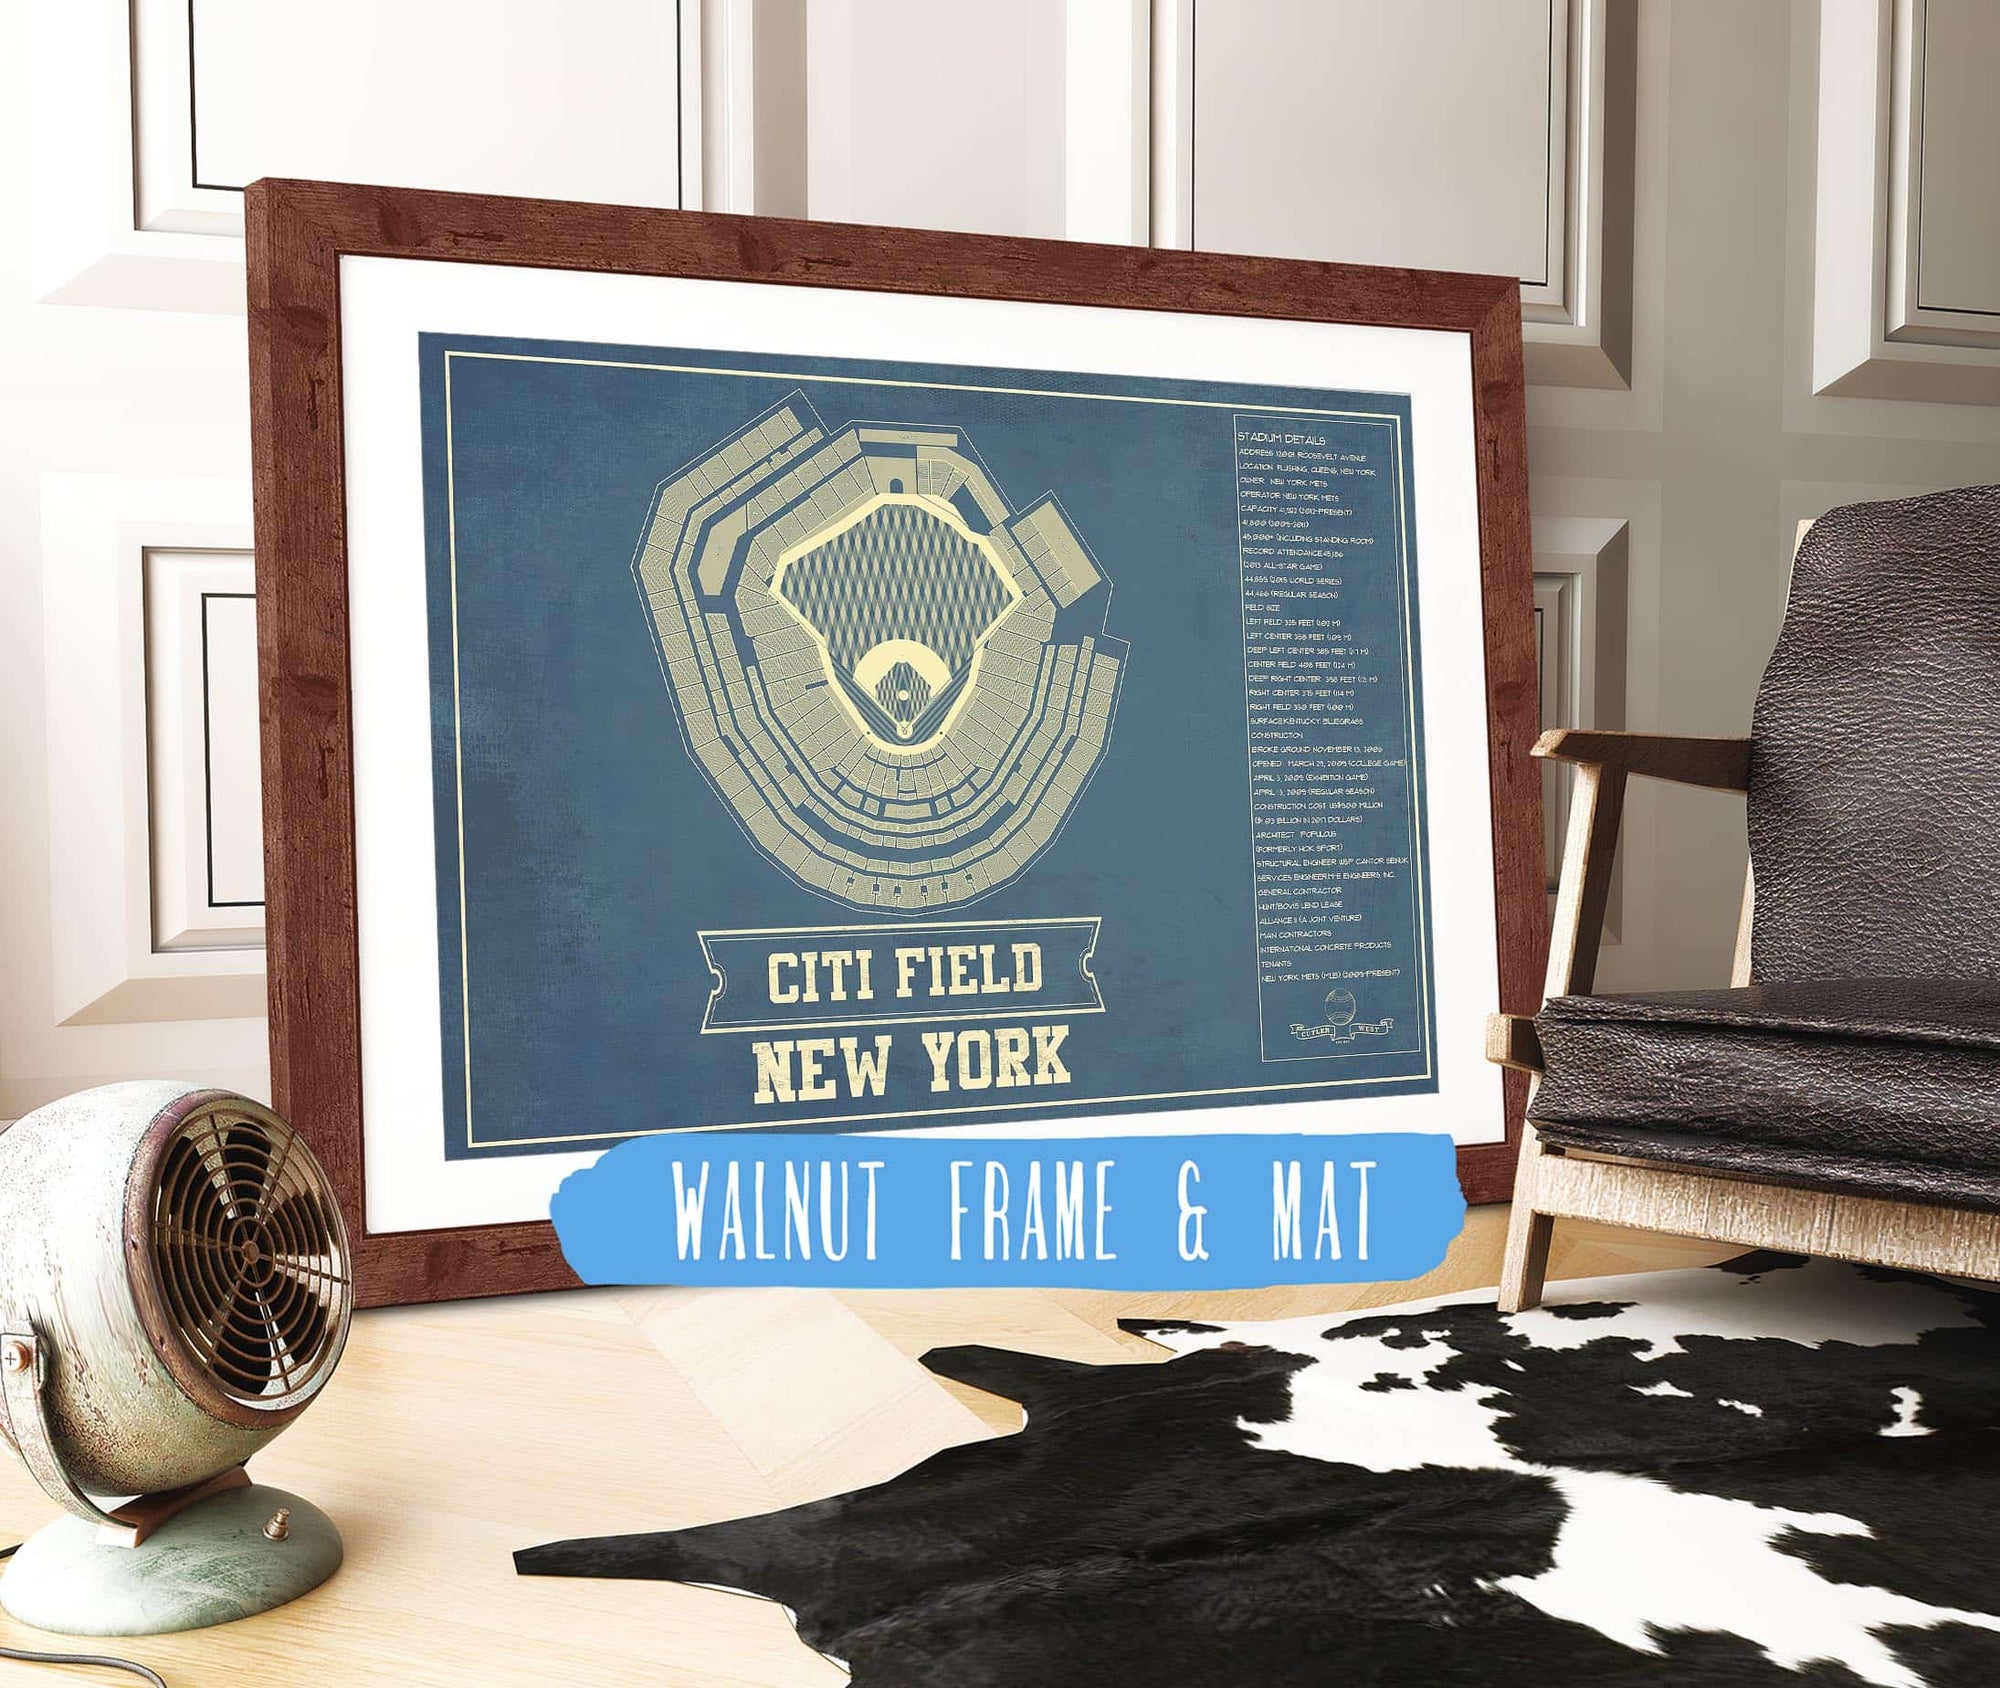 Cutler West New York Mets - Citi Field Vintage Seating Chart Baseball Print